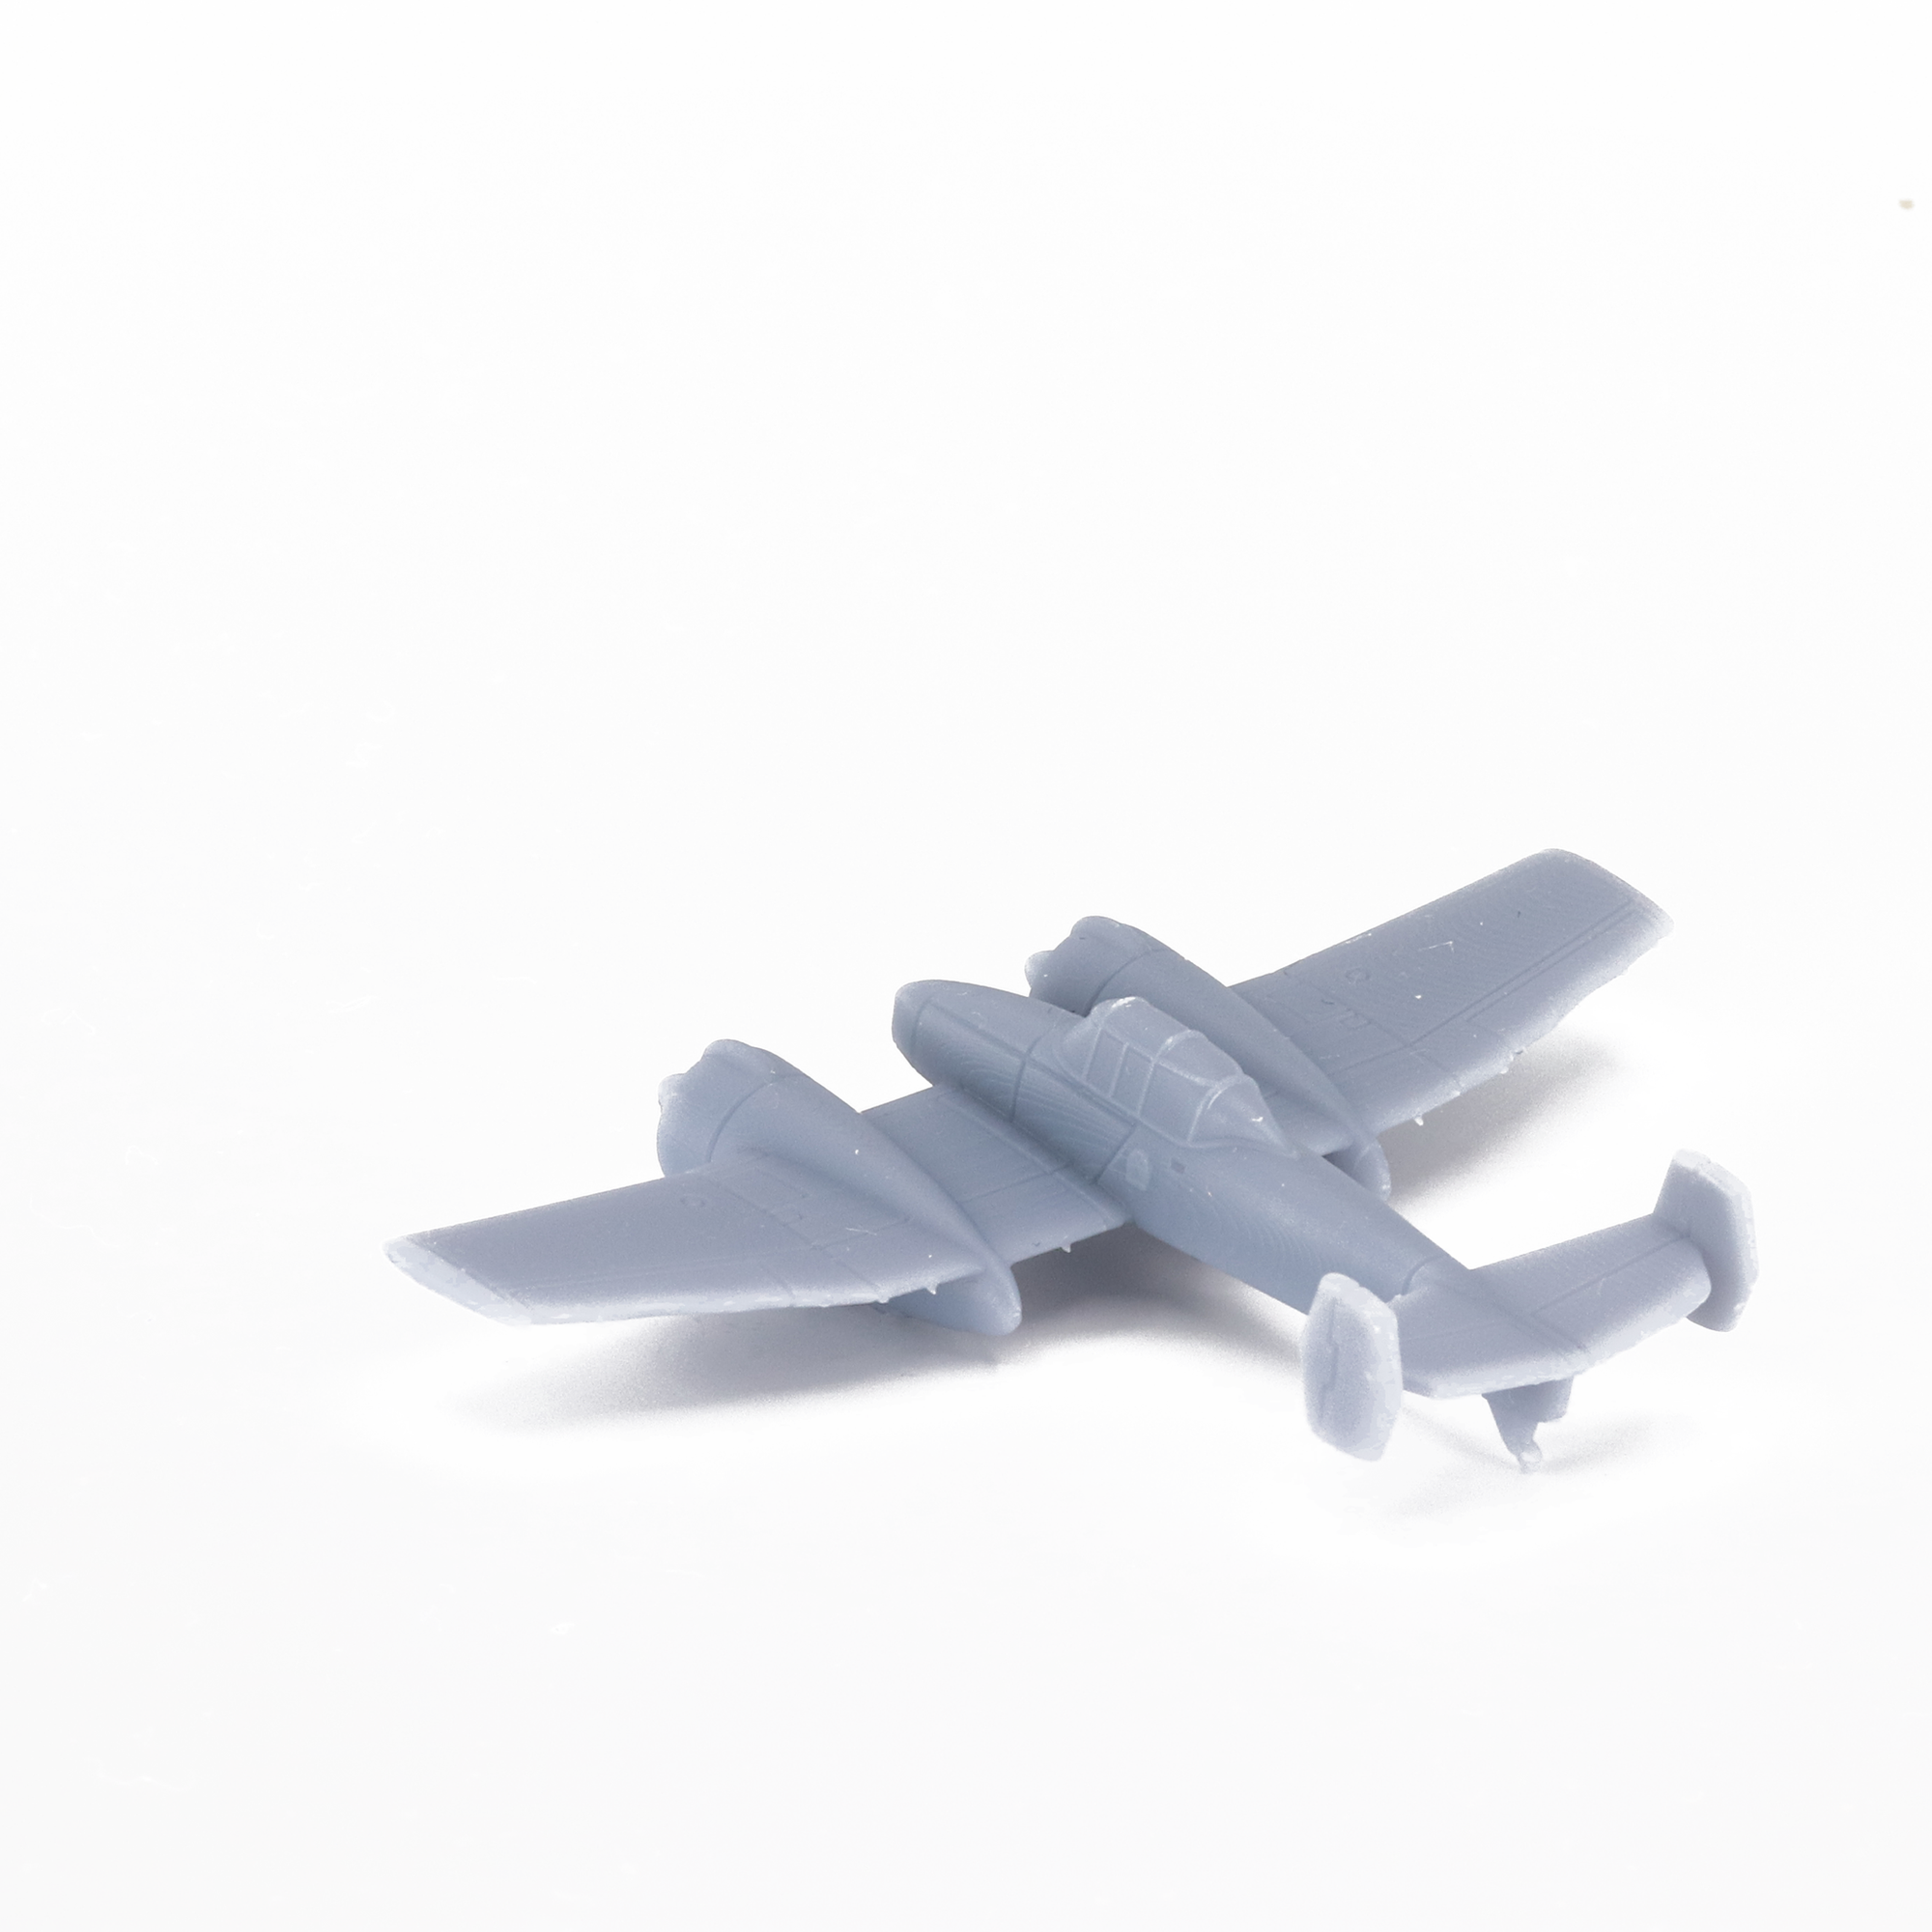 Grumman XF5F Skyrocket (late)